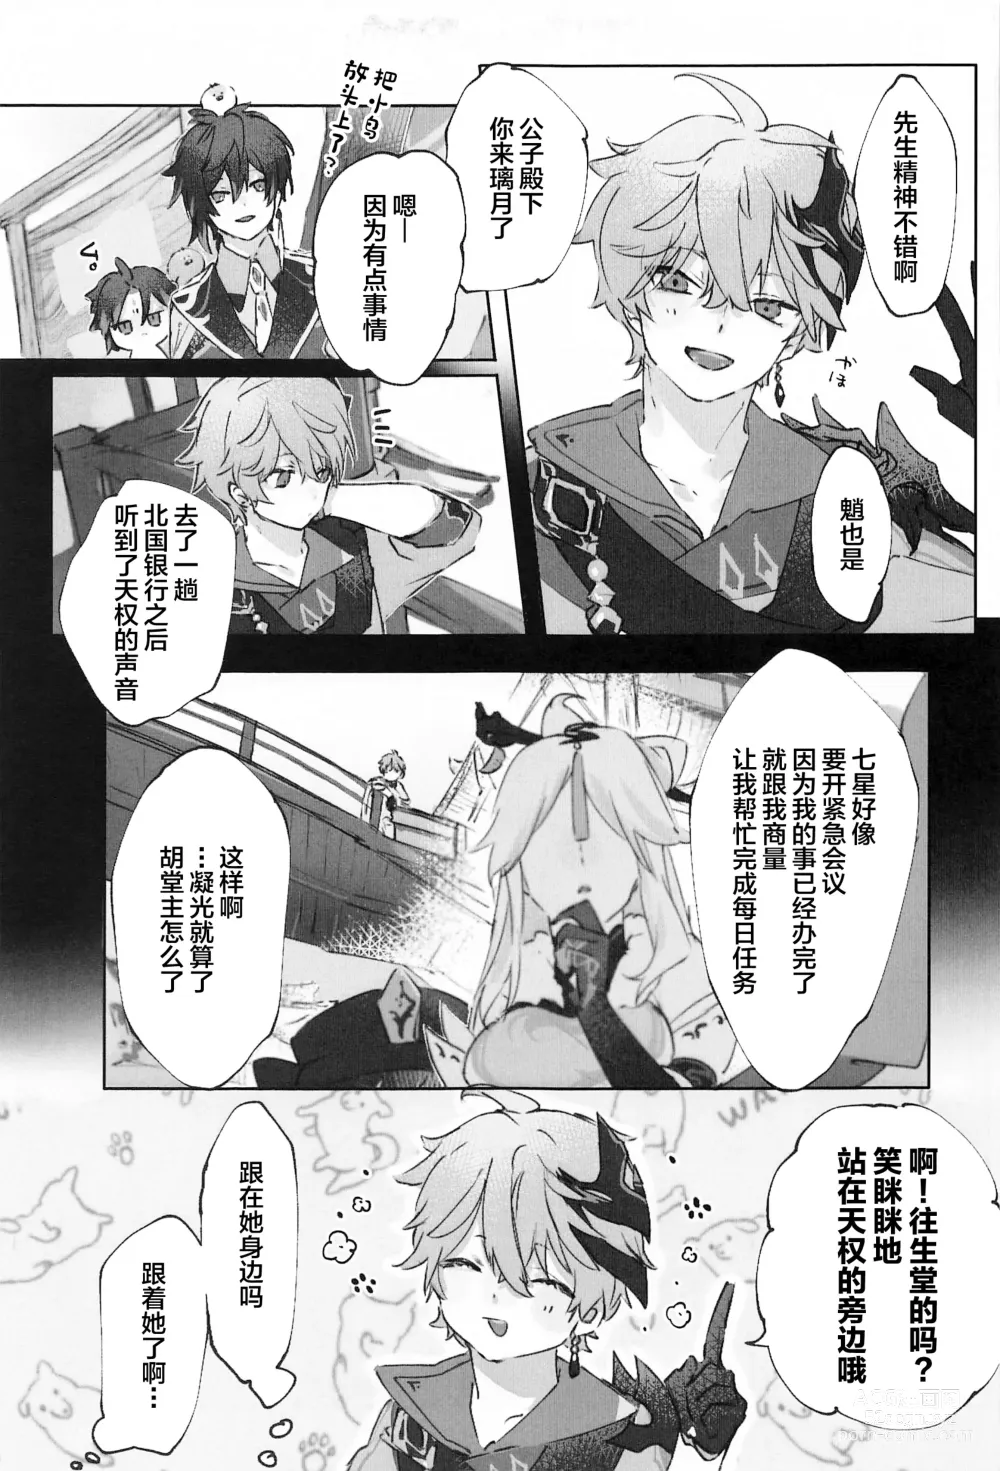 Page 7 of doujinshi Okawari.